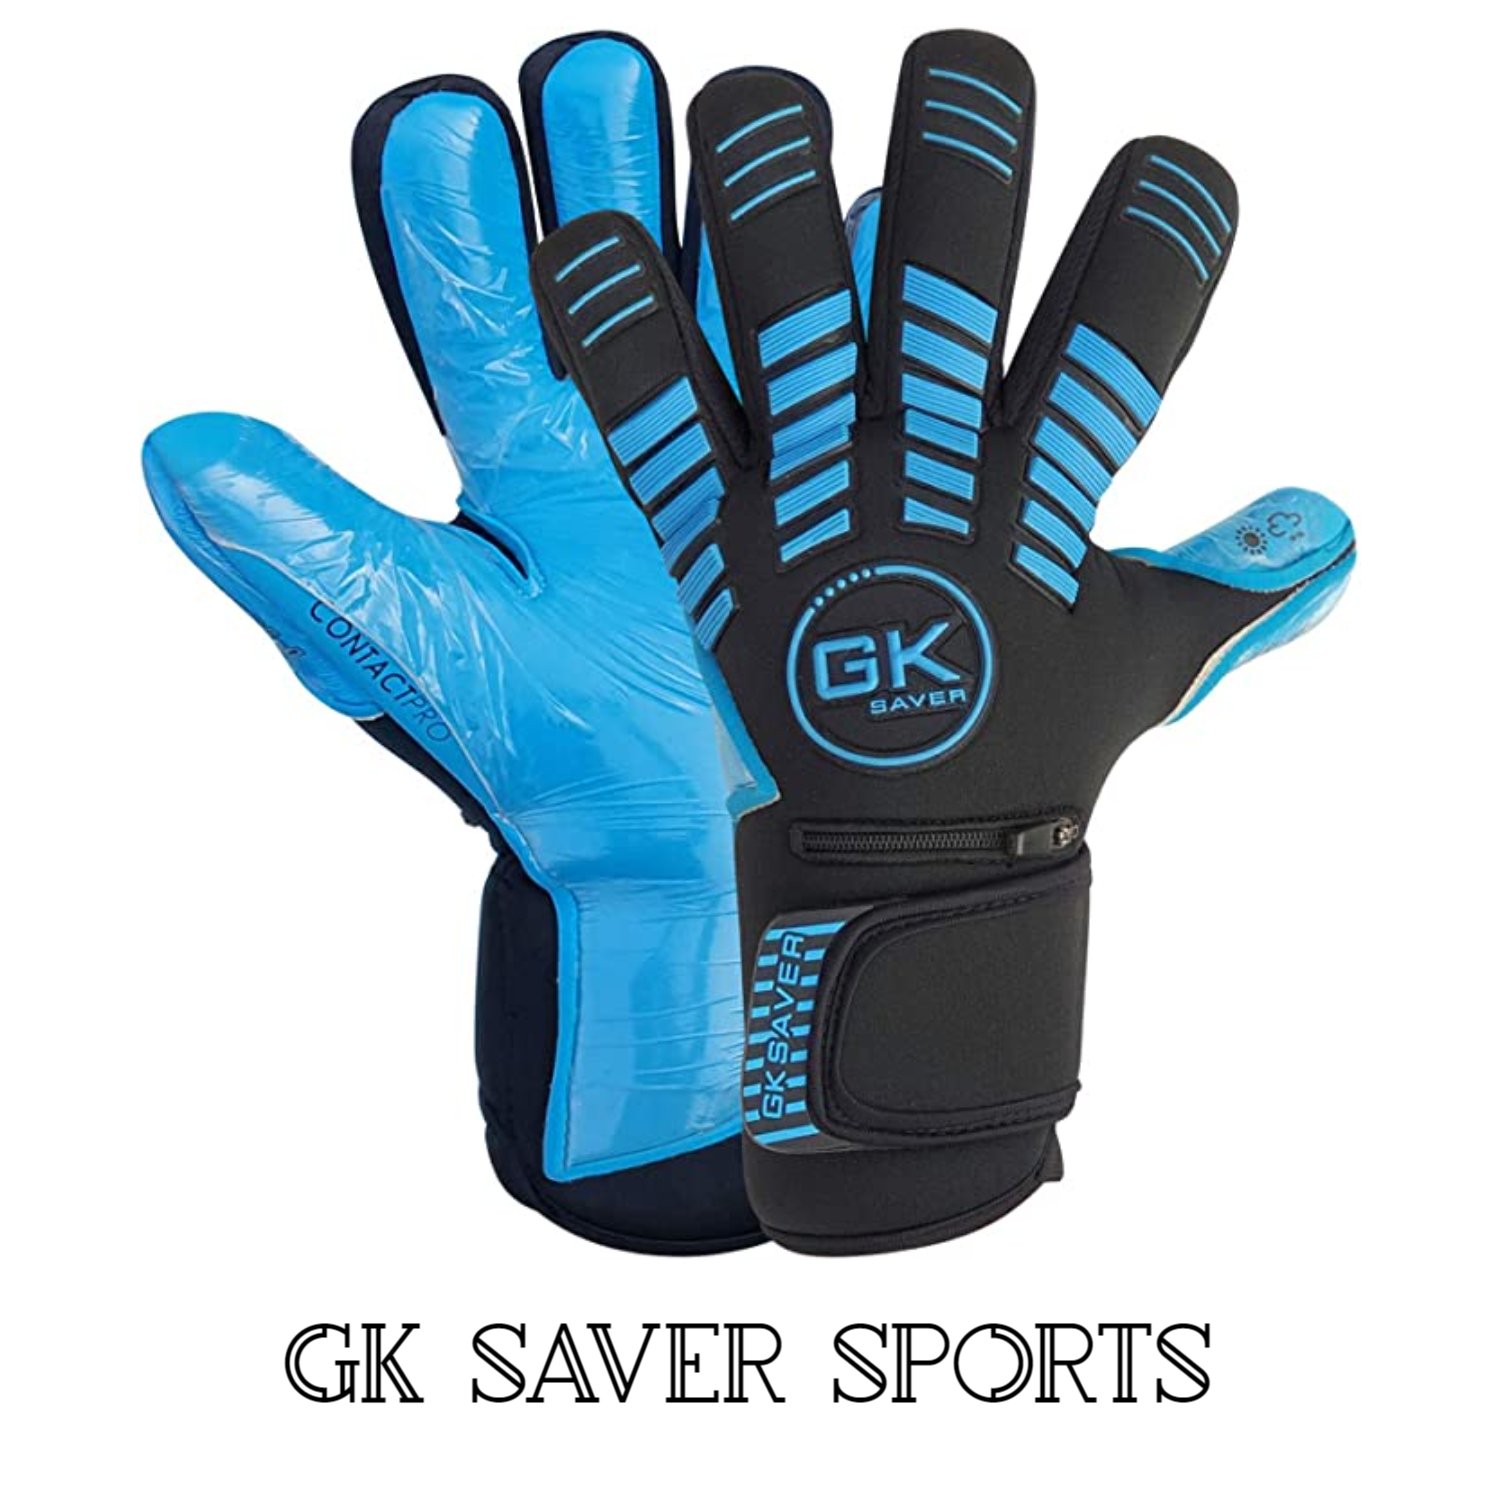 GK Saver Football Goalkeeper Goalie Gloves Camo Blue Negative Cut Gk Gloves 